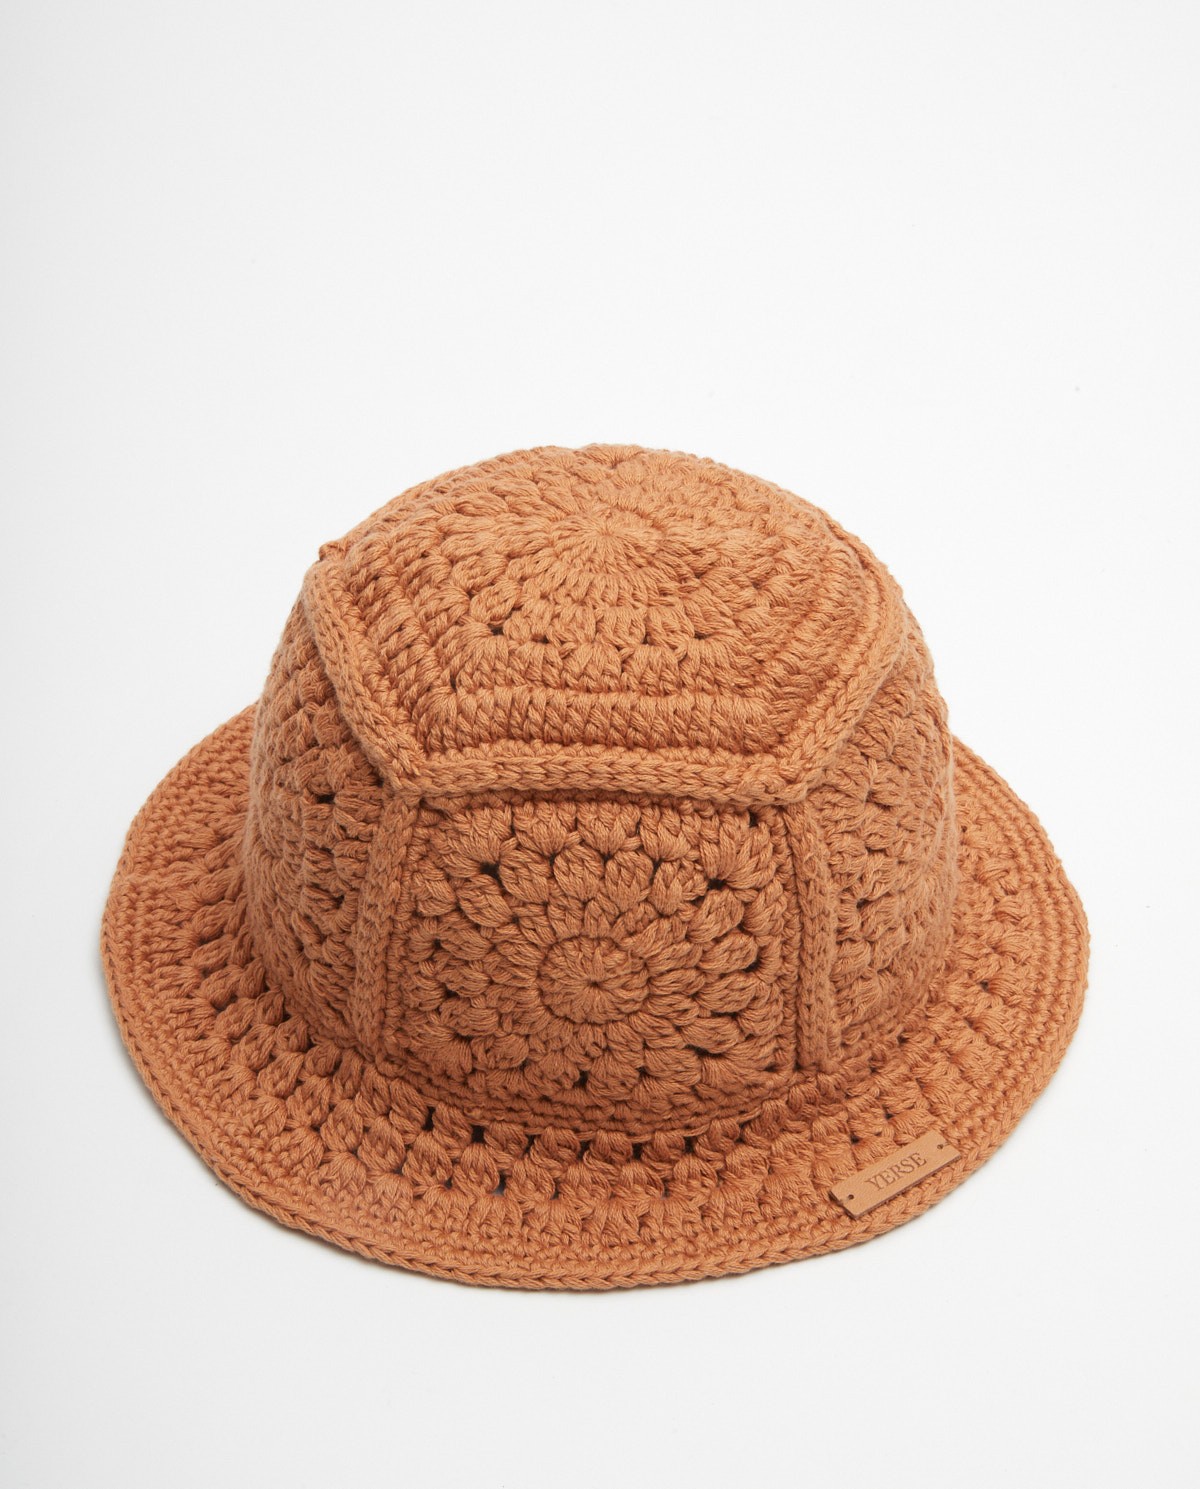 Crochet cotton hat Ambar 1